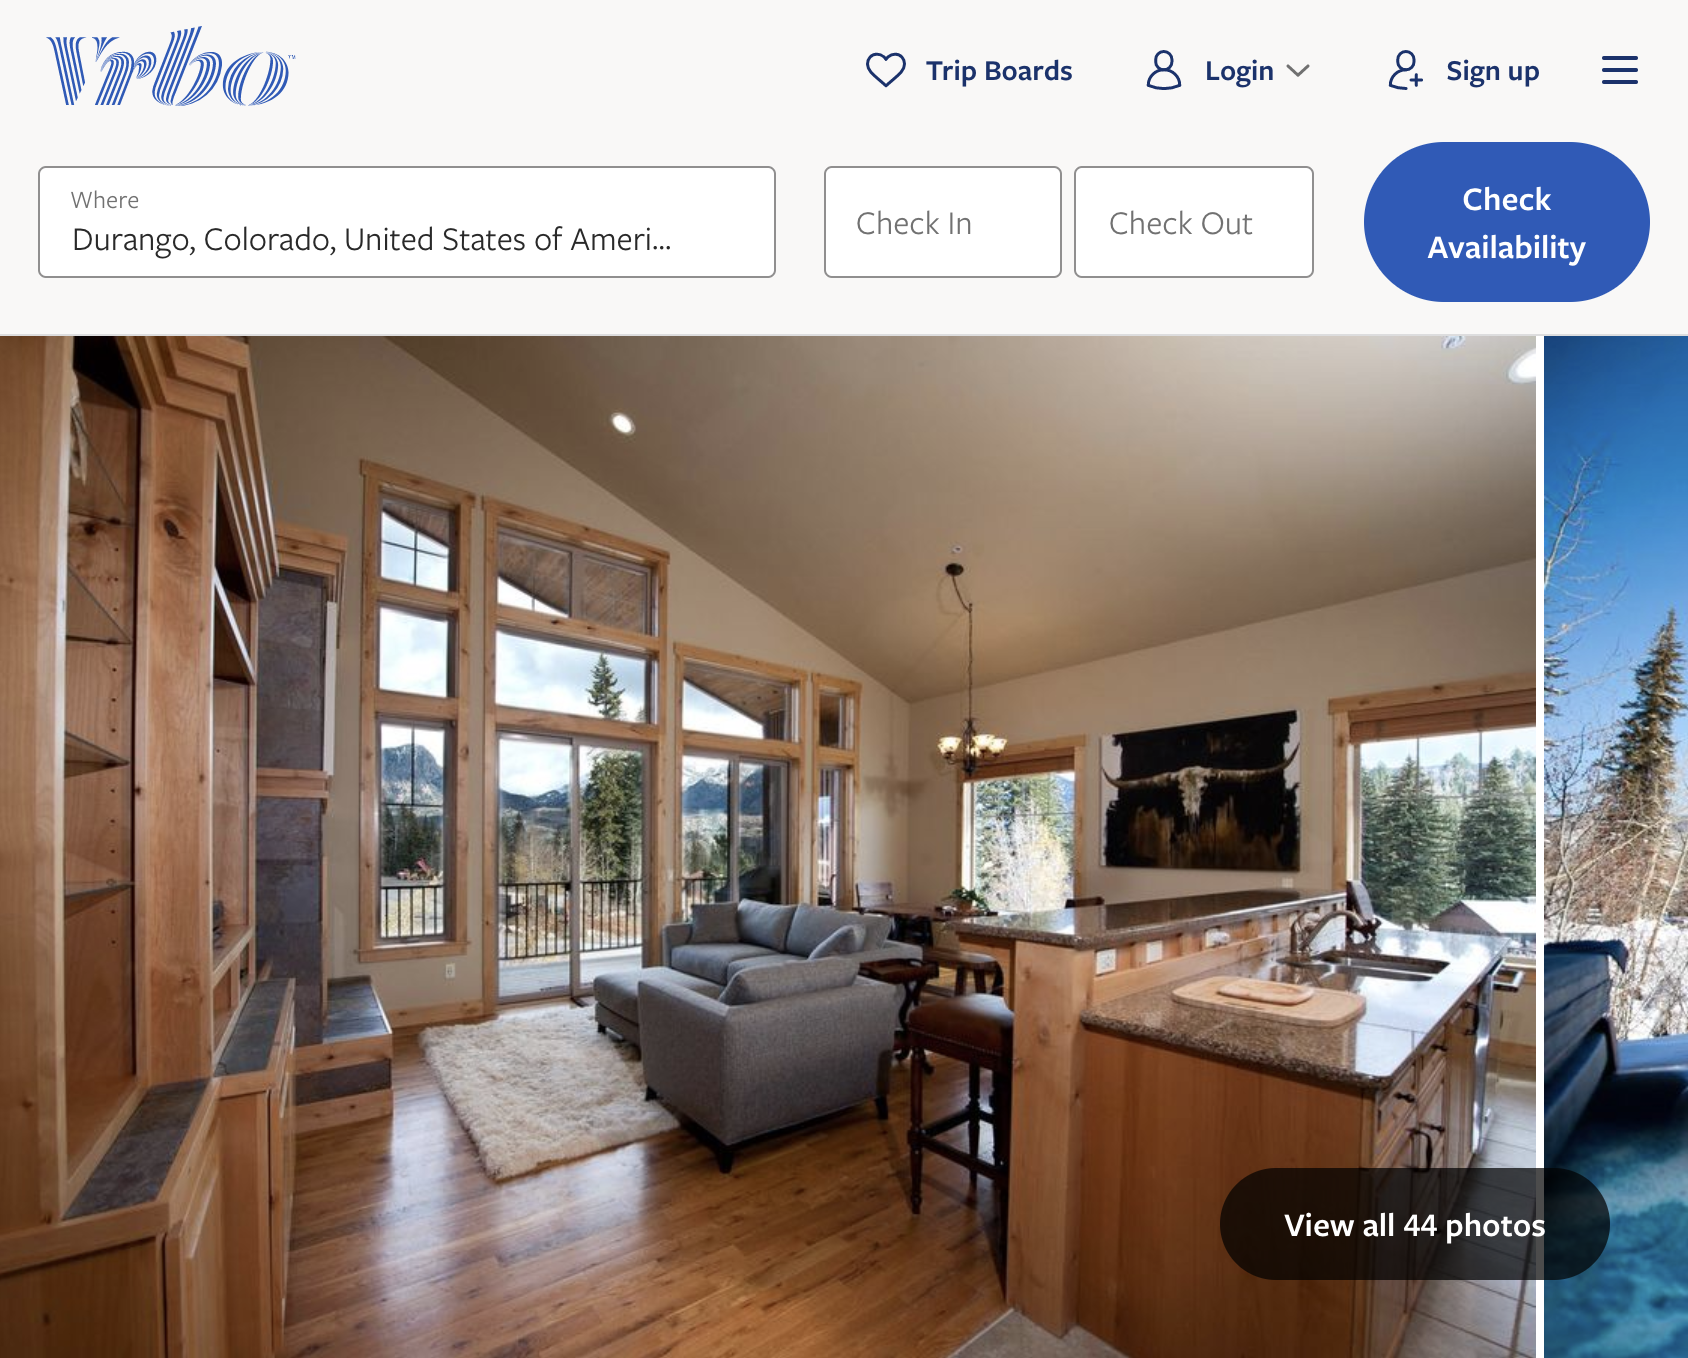 Vrbo listing of a Colorado short-term rental